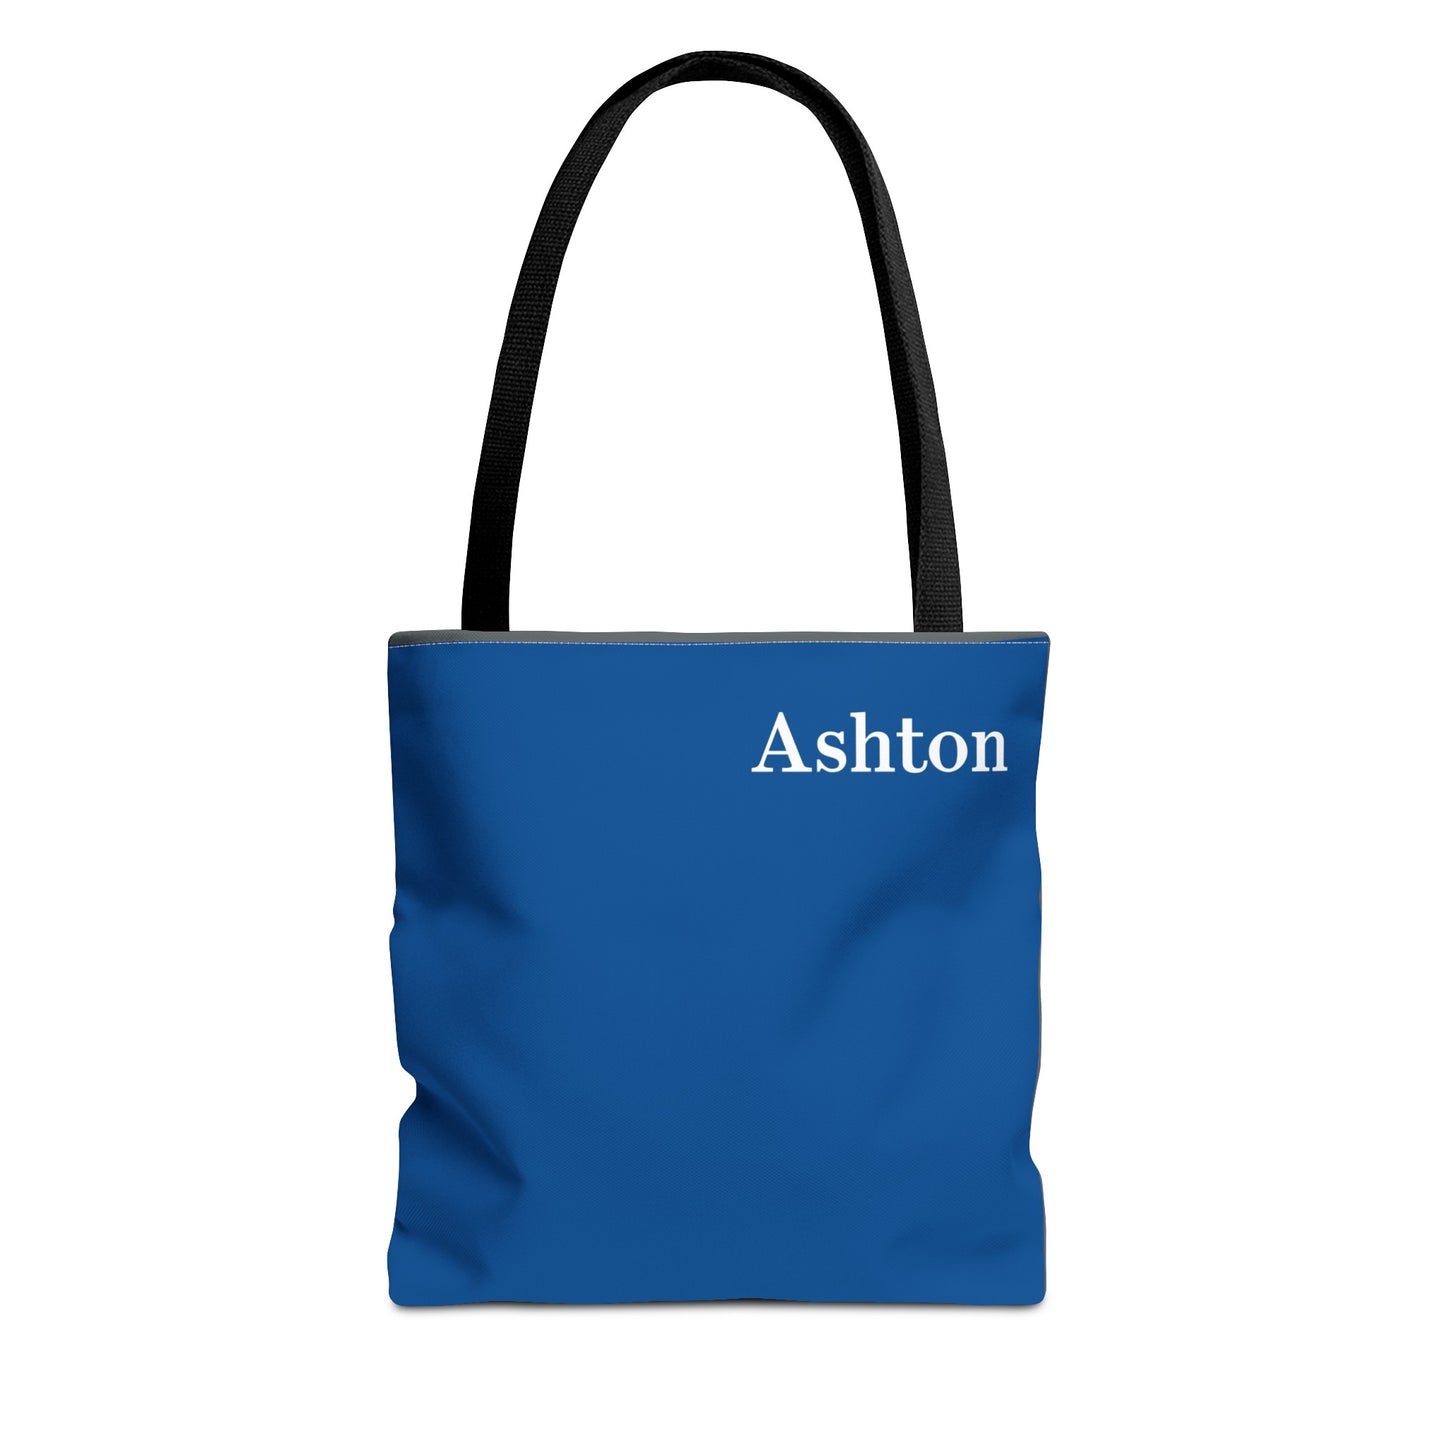 Ashton Tote Bag